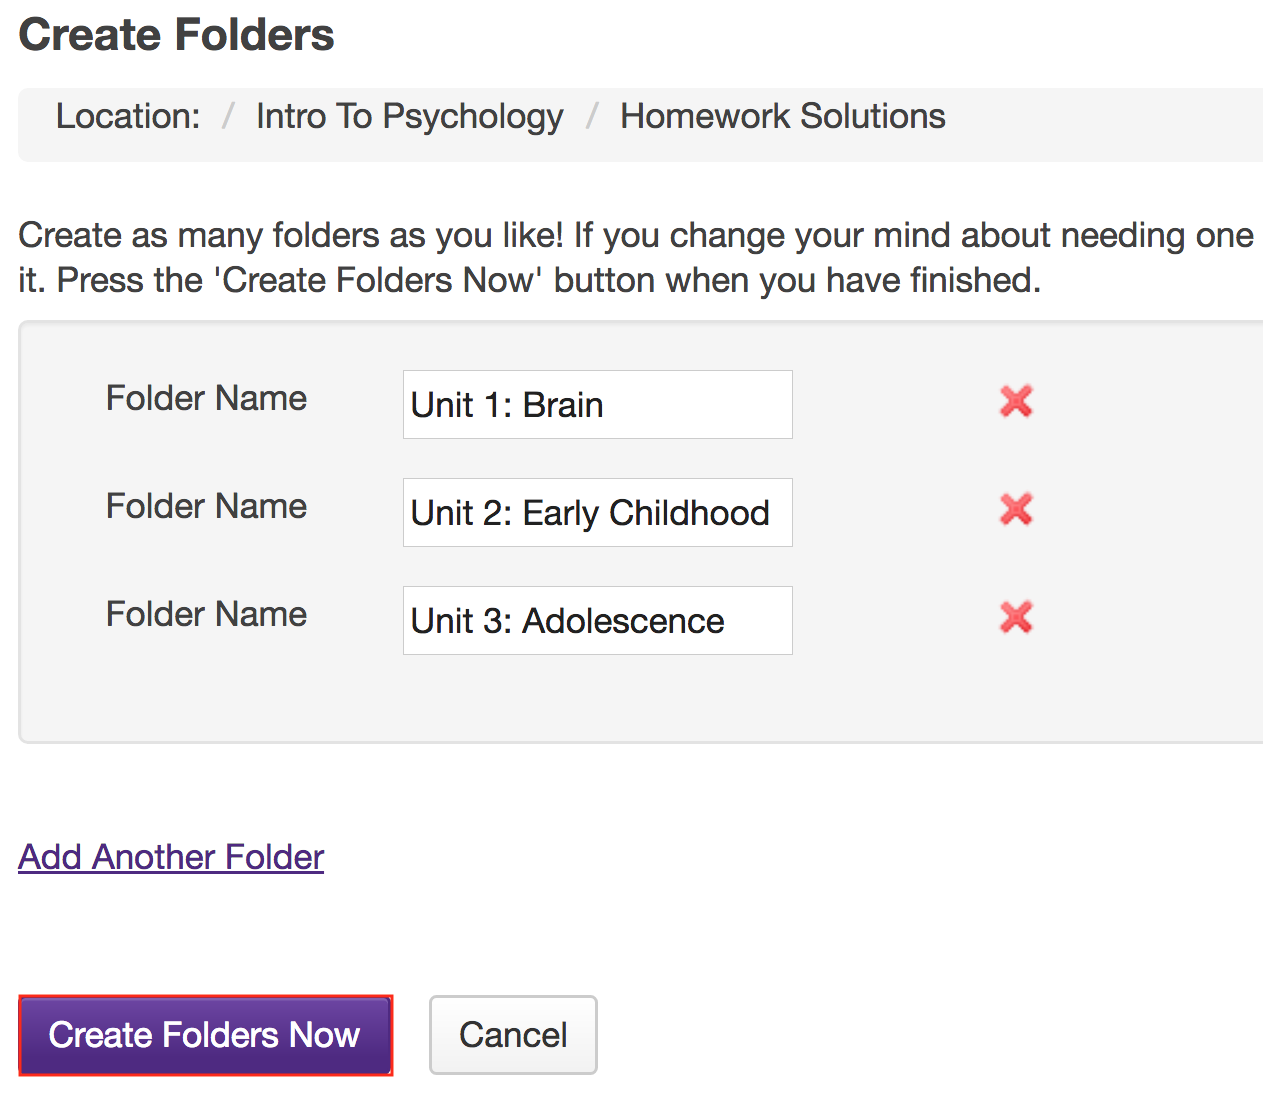 Click Create Folders Now.